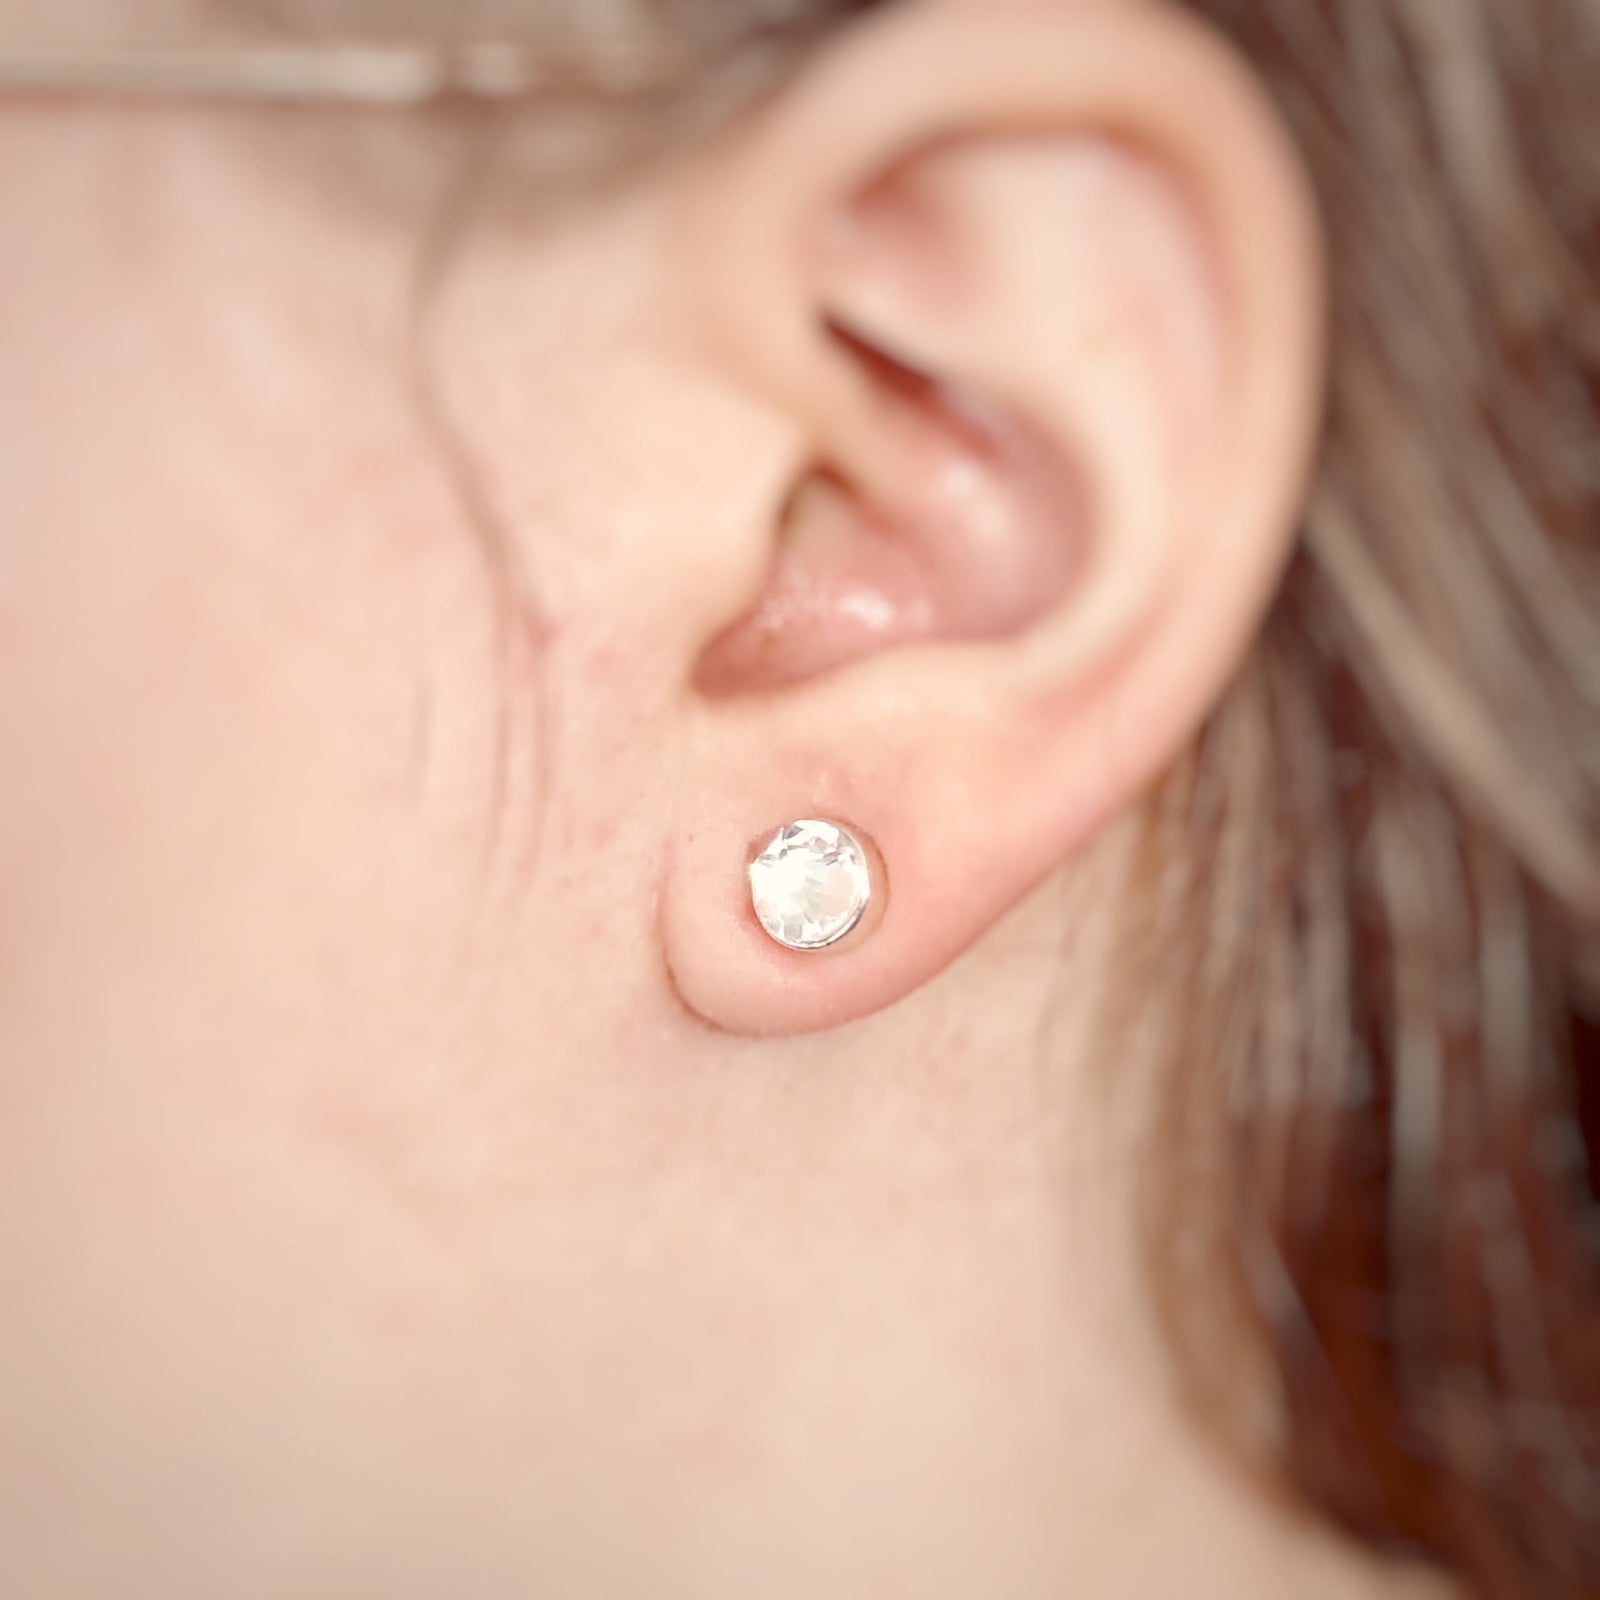 Keloid earrings clip on keloid pressure earring for keloid pressure ea -  Hand Stamped Trinkets